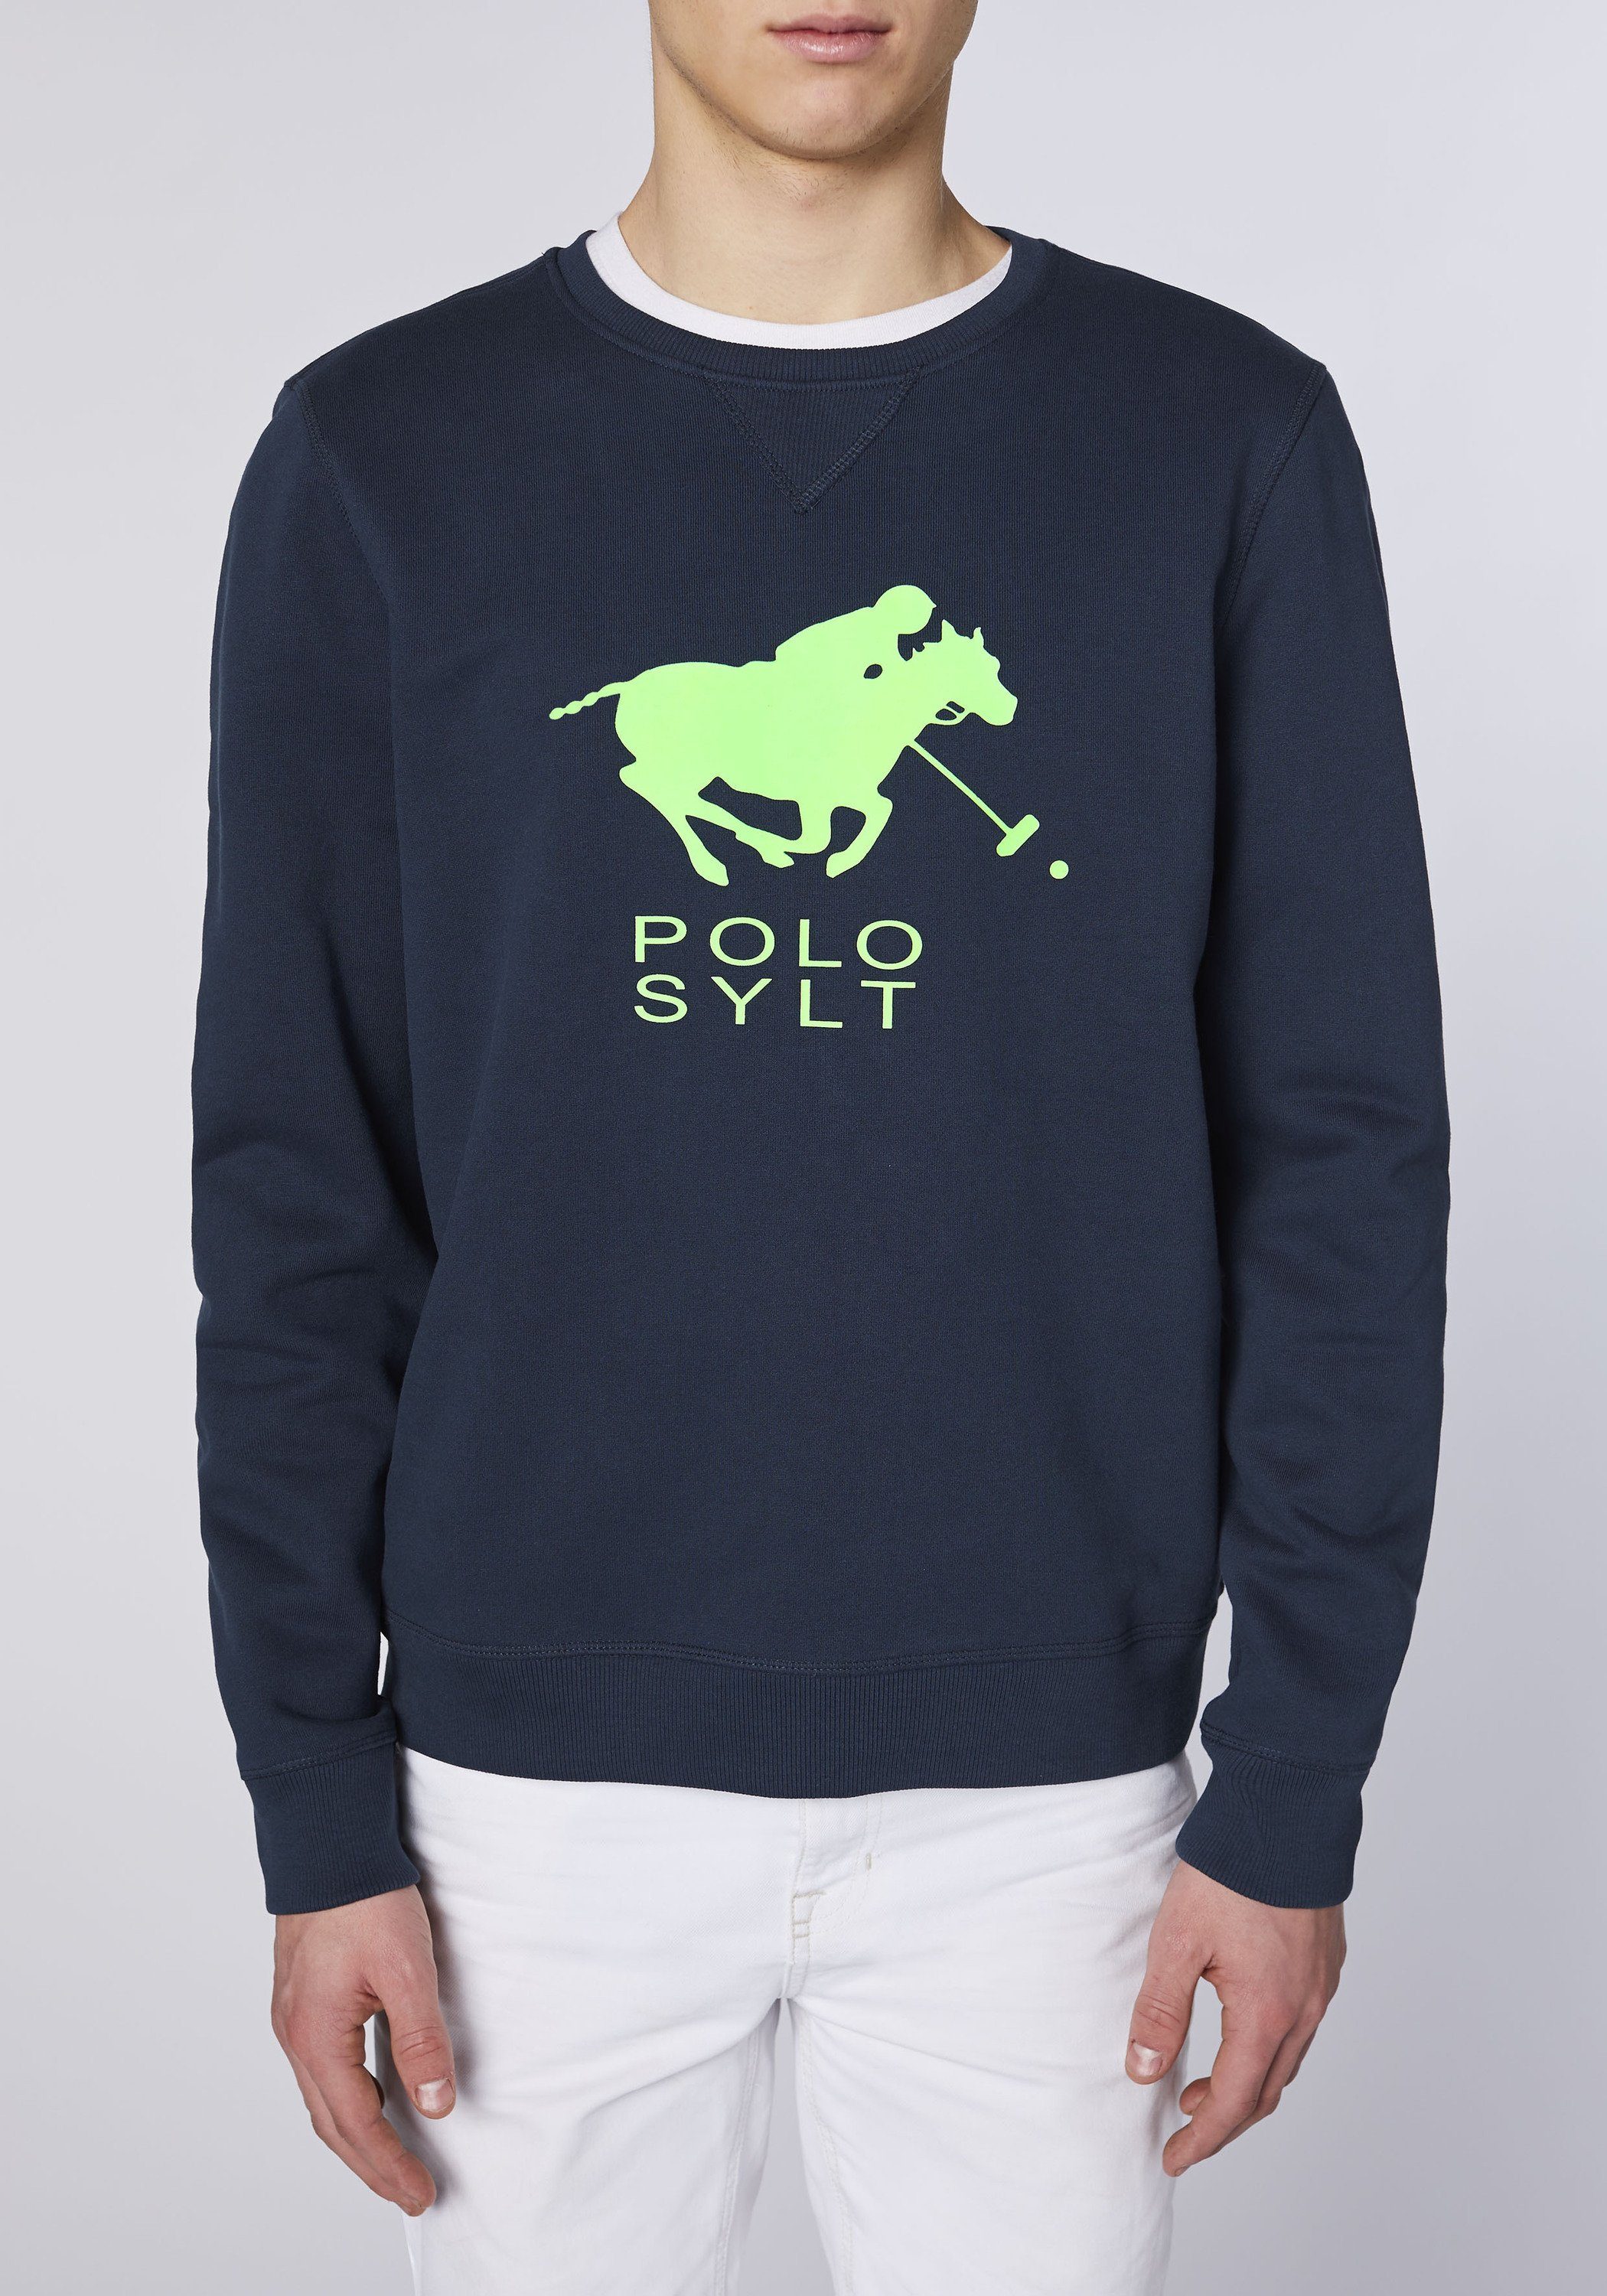 Polo Sylt Sweatshirt Label-Motiv Eclipse mit Total